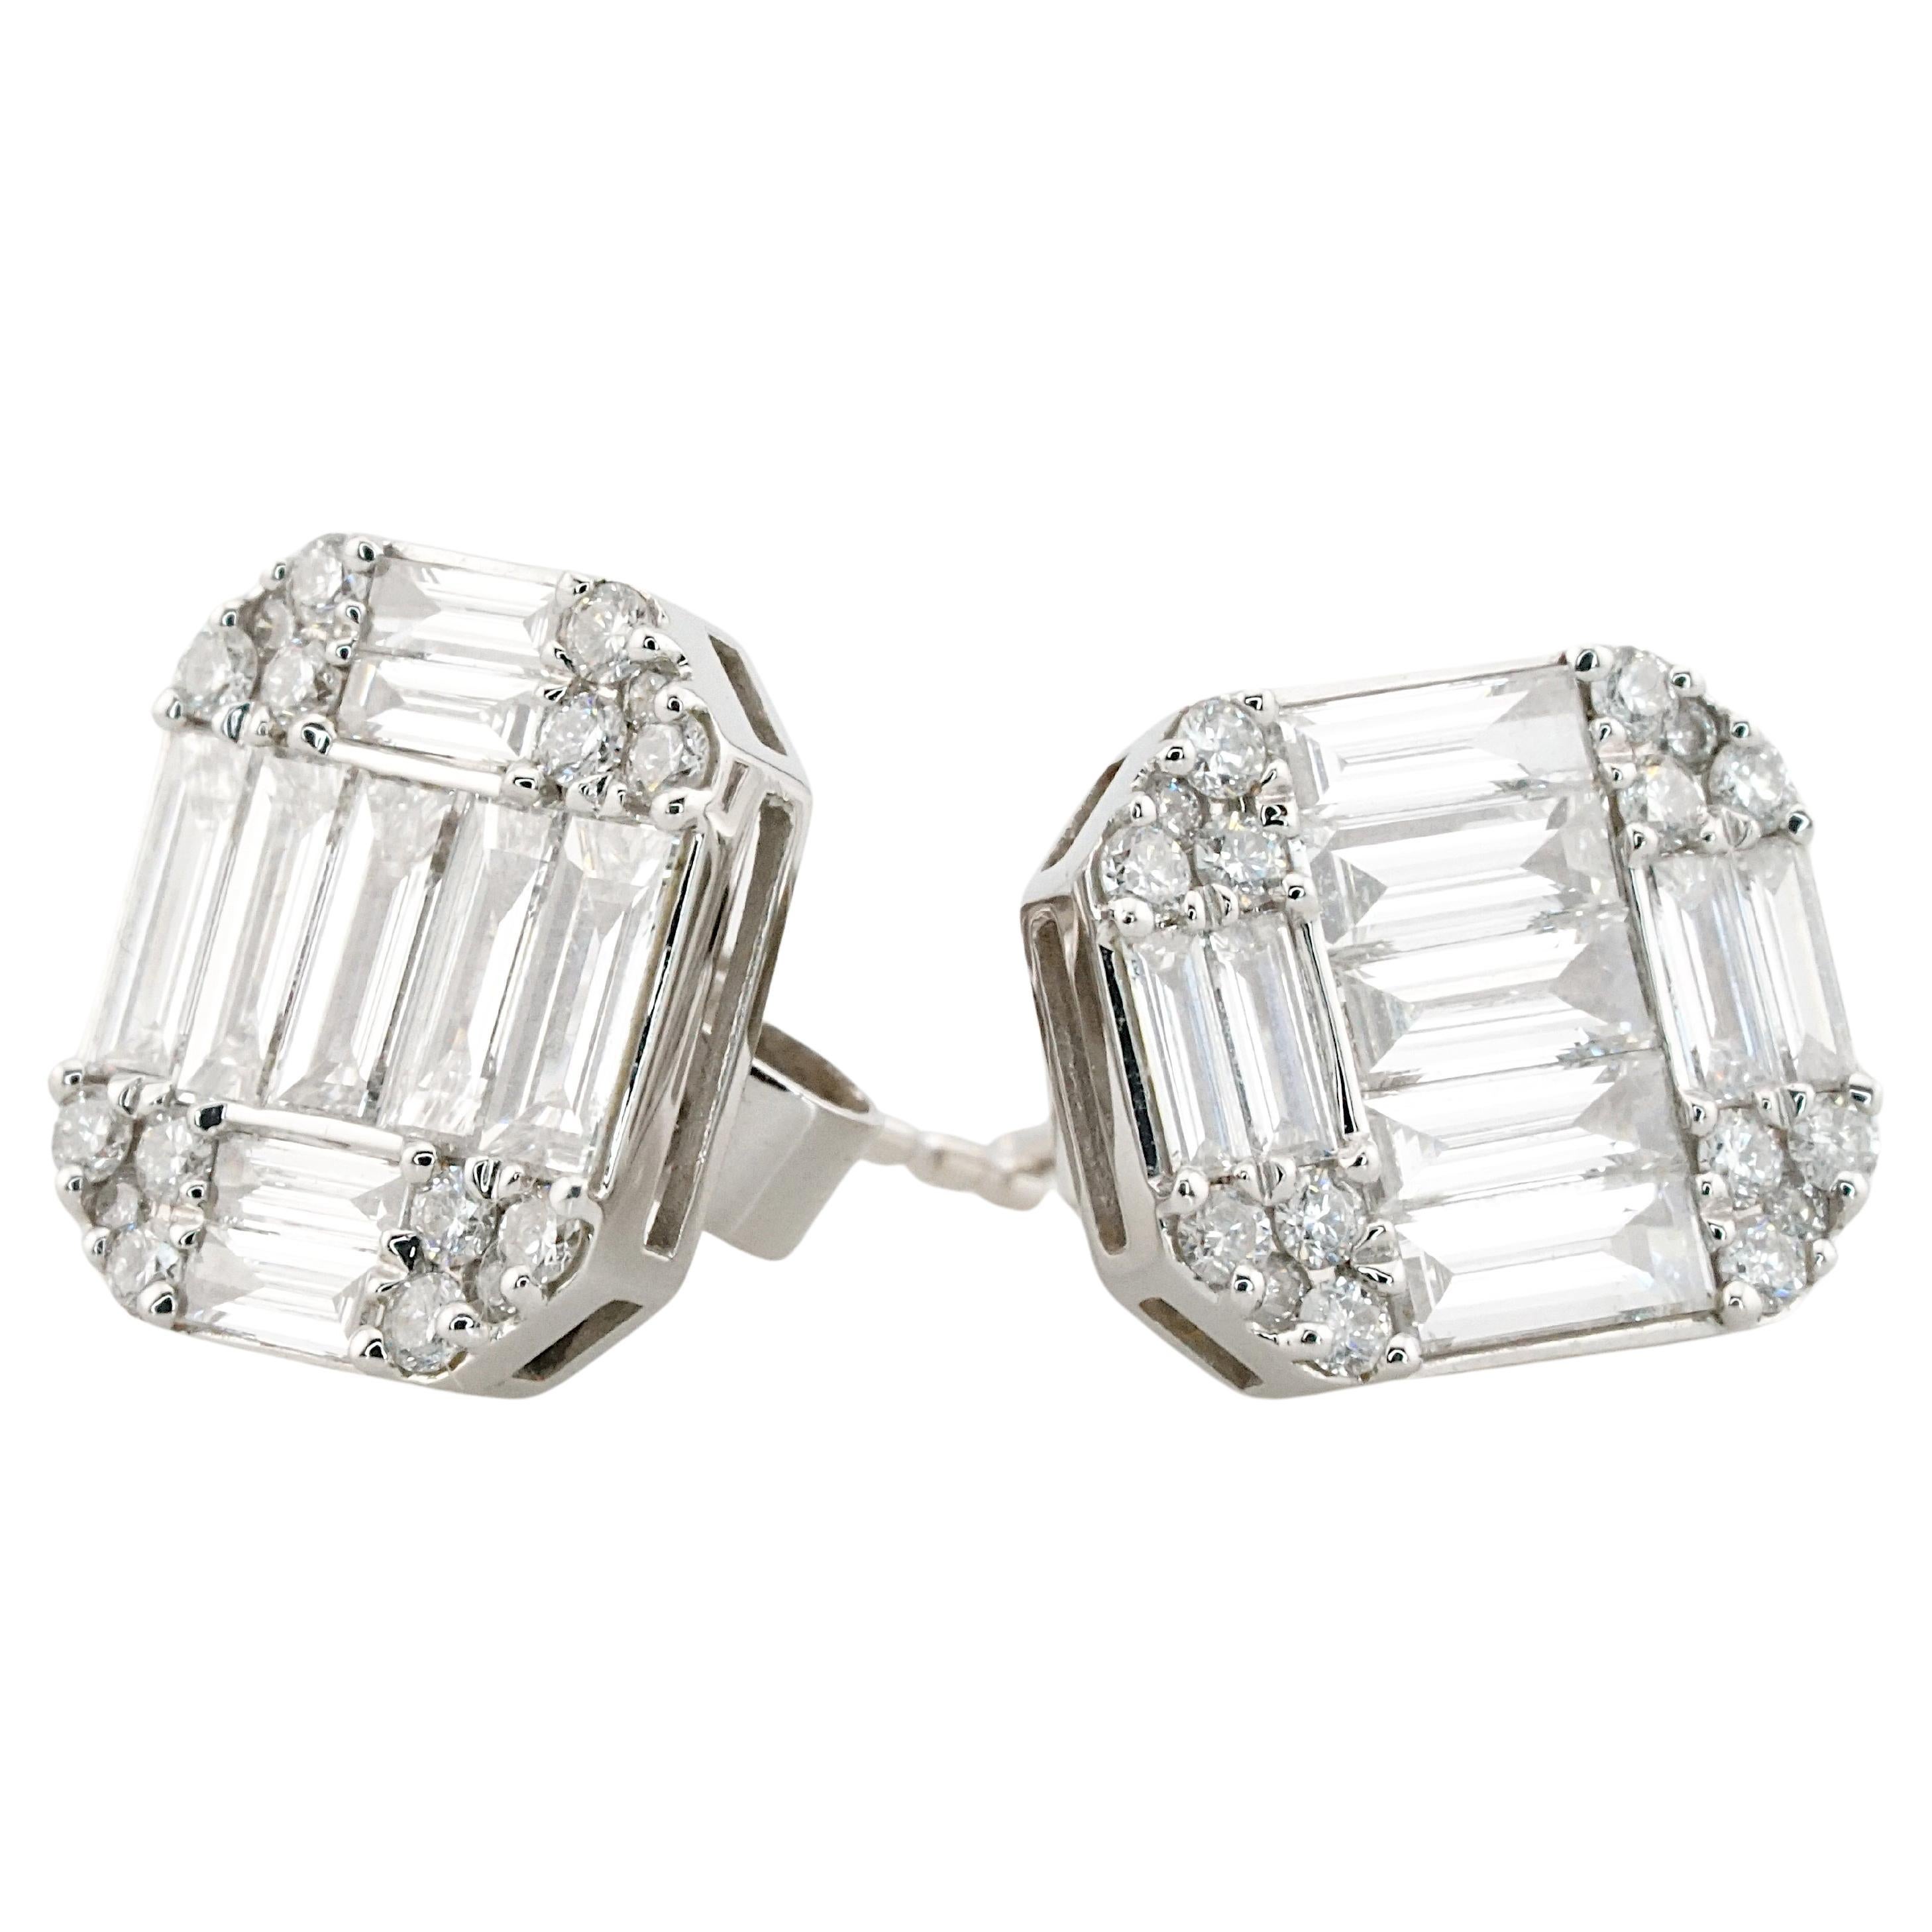 1.46 Carat Baguettes Diamonds 18K White Gold Magic Earrings For Sale